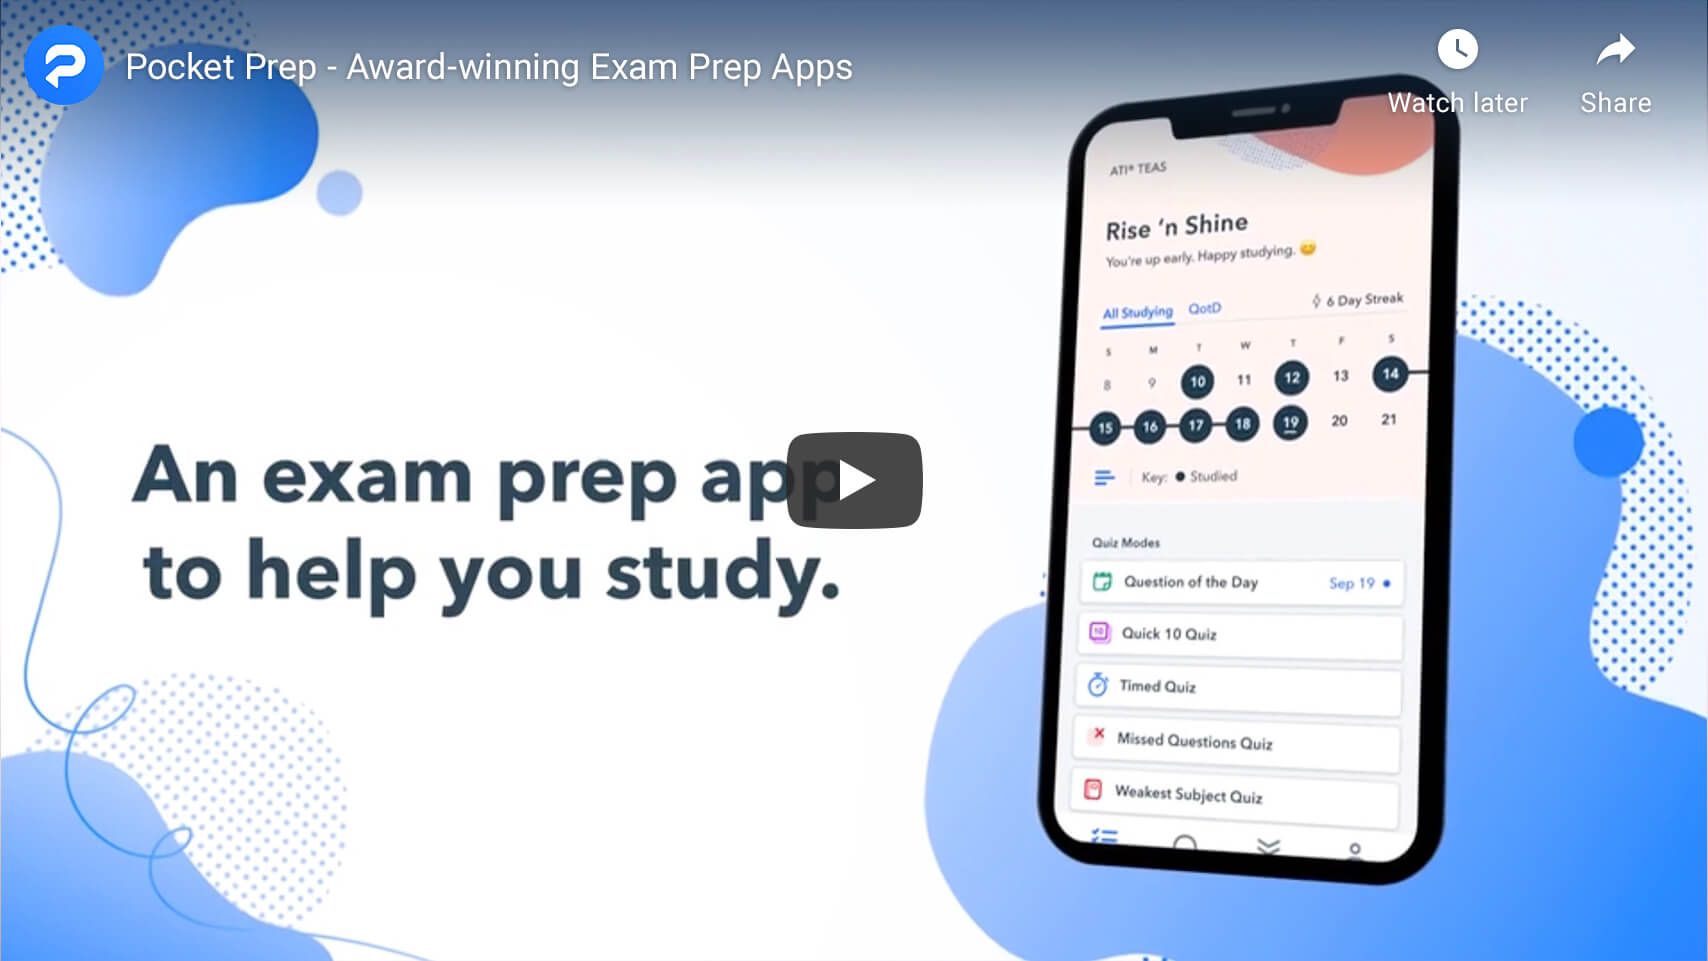 YouTube Video Pocket Prep - Award-winning Exam Prep Apps.